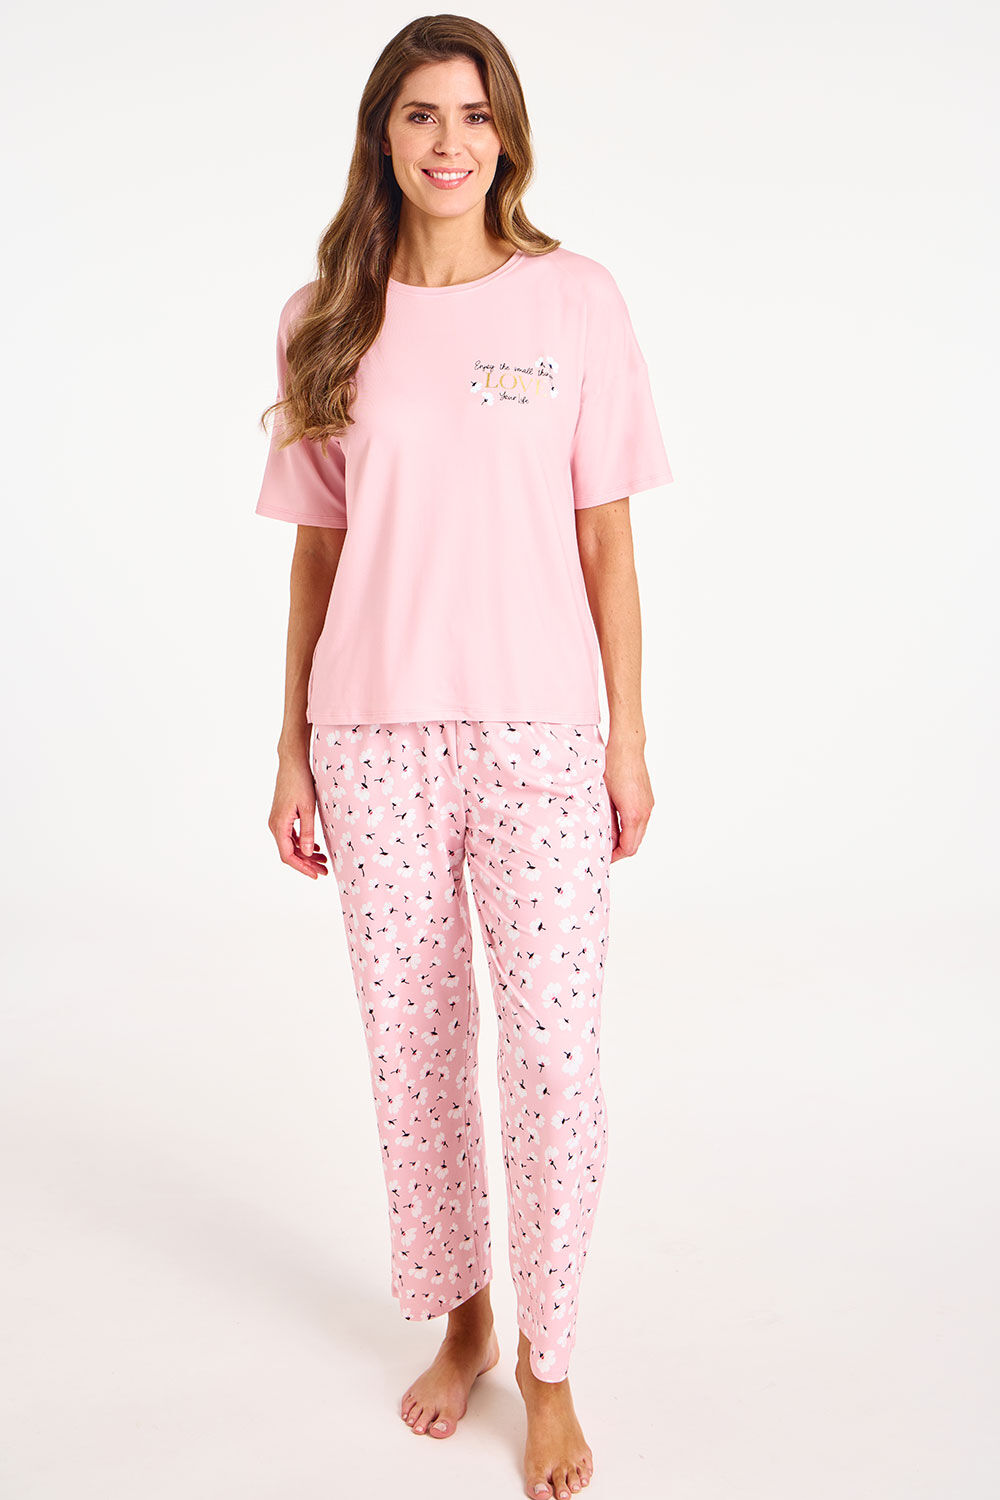 Bonmarche Short Sleeve Pink Floral Foil Print Pyjama Set, Size: 20-22